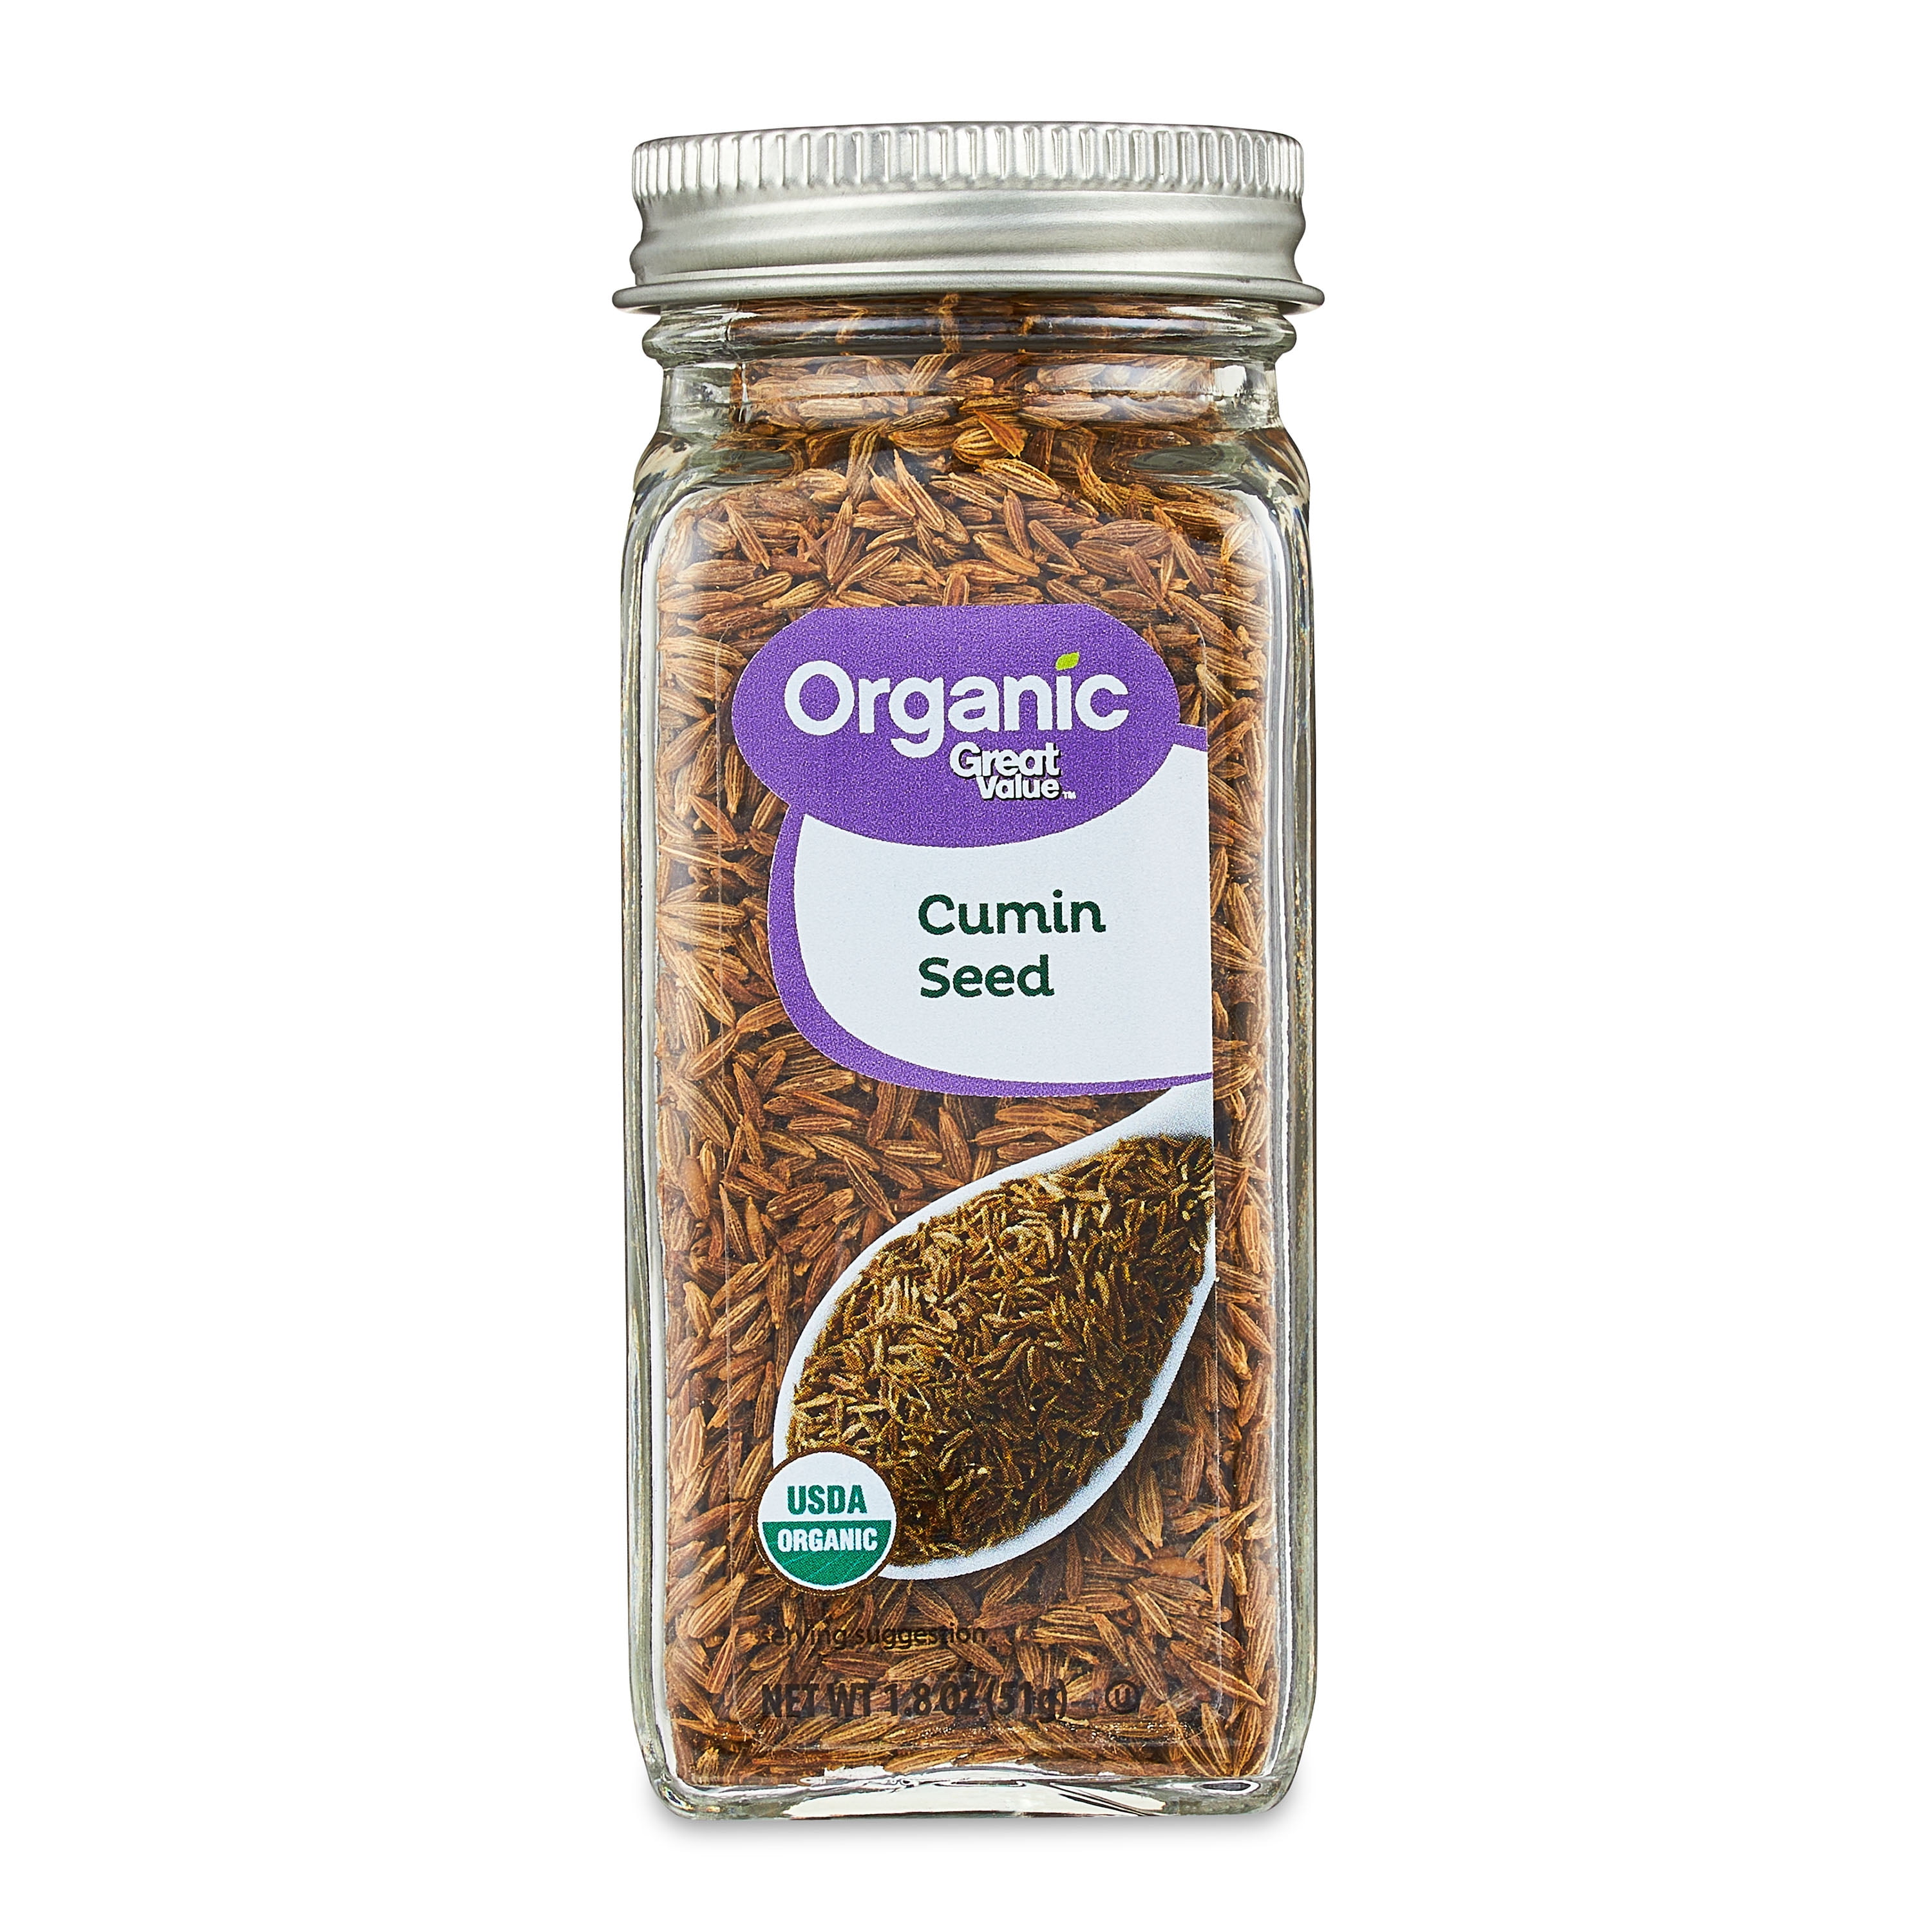 Great Value Organic Cumin Seed, 1.8 oz